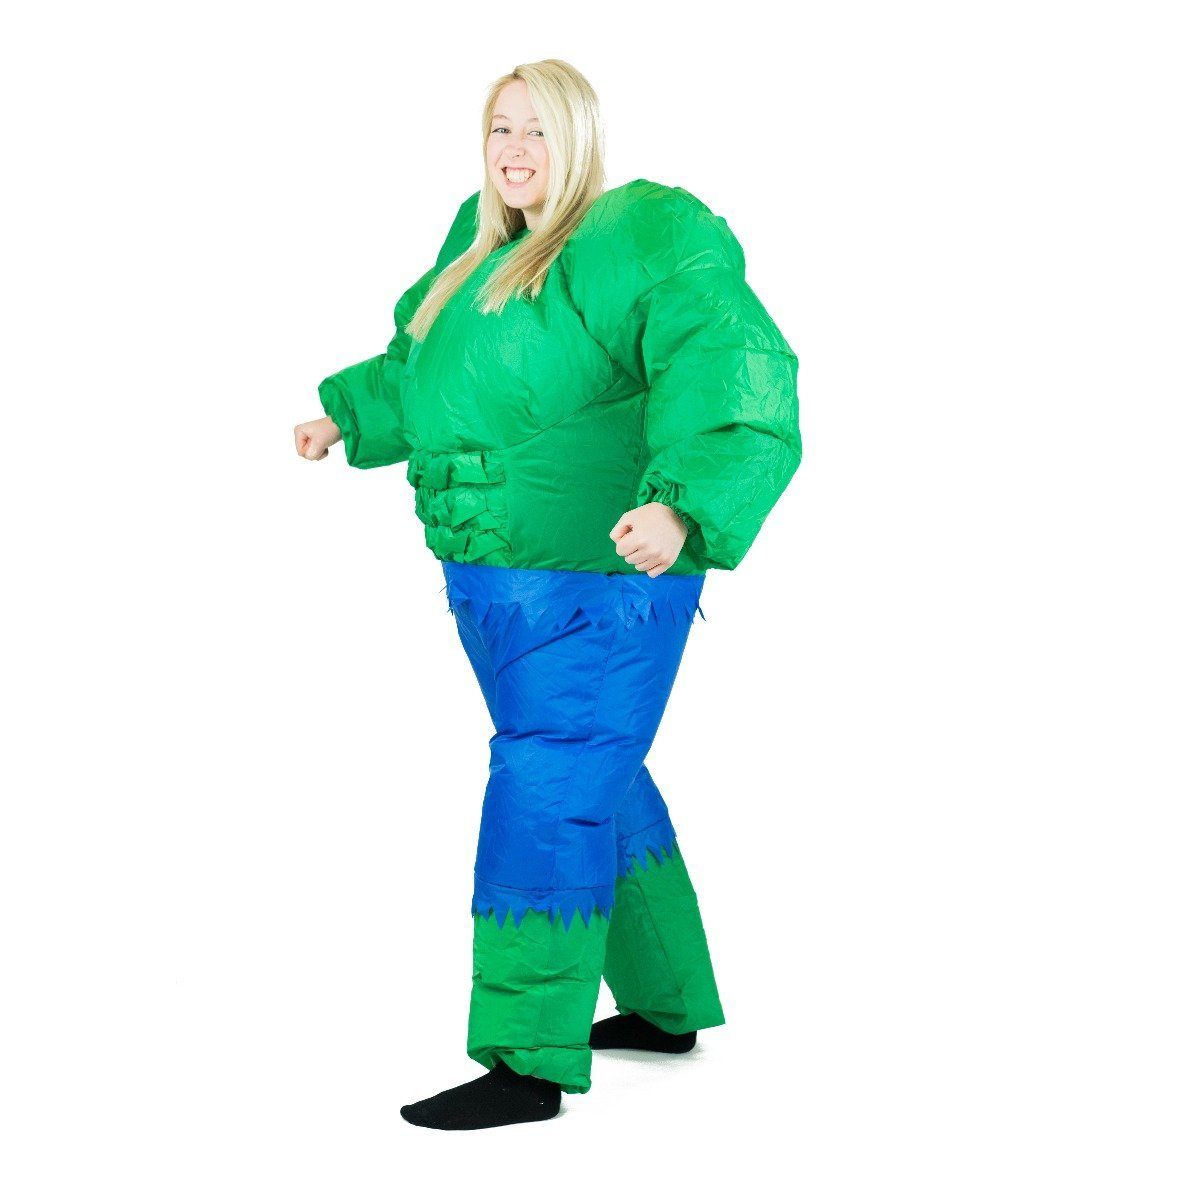 Fancy Dress - Inflatable Hulk Costume